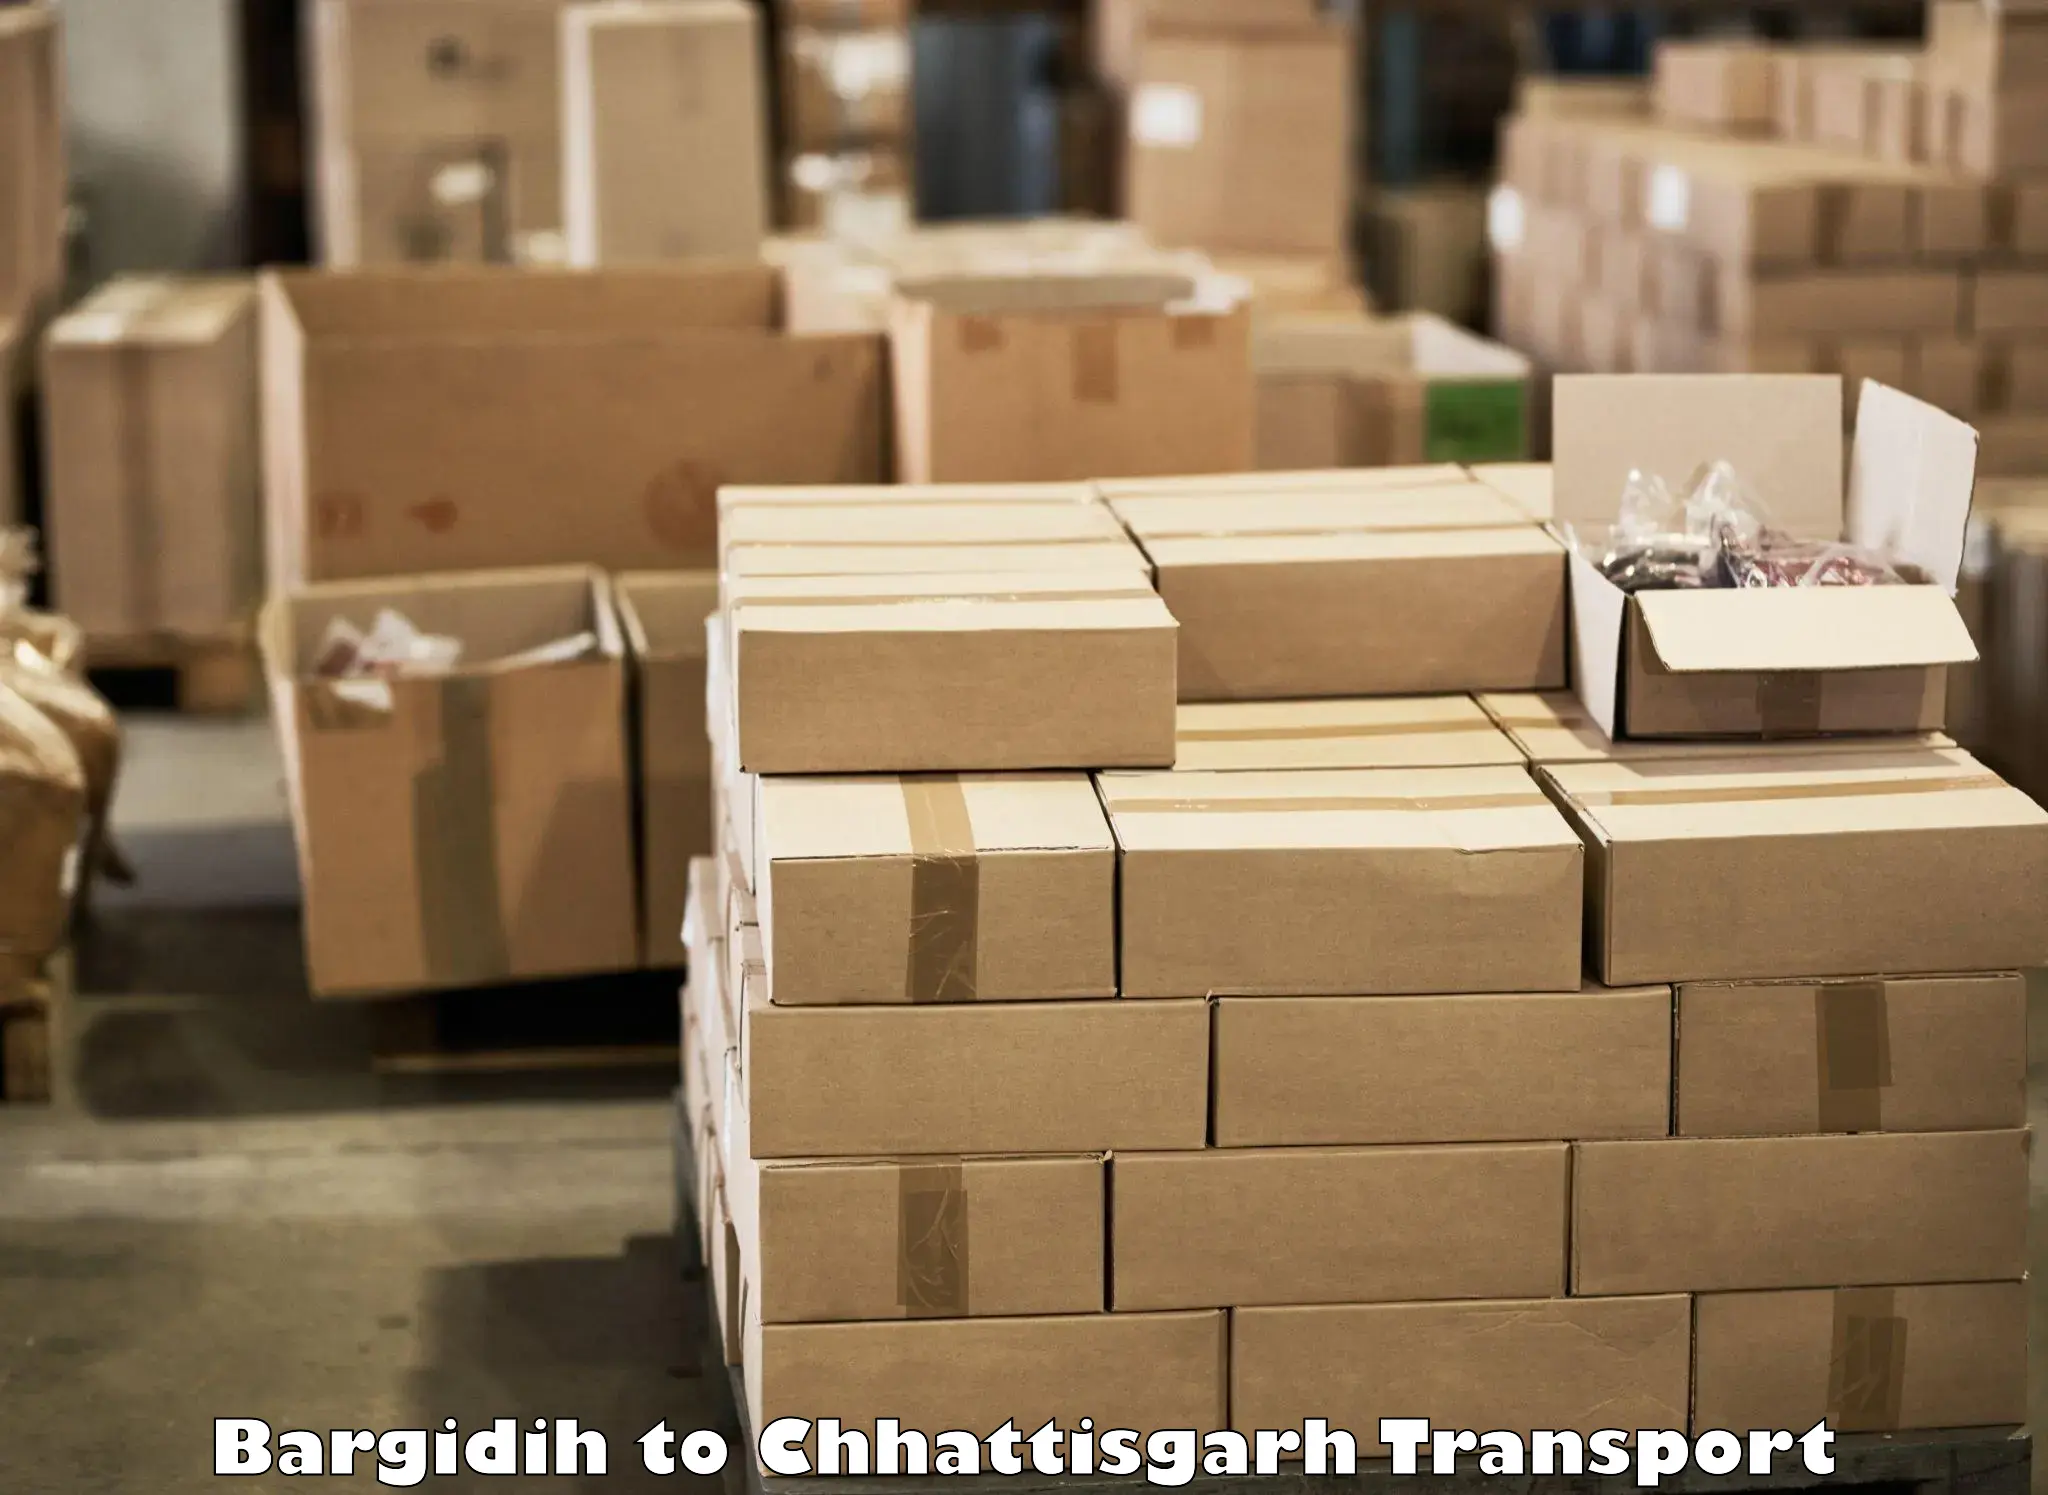 Truck transport companies in India Bargidih to Bargidih